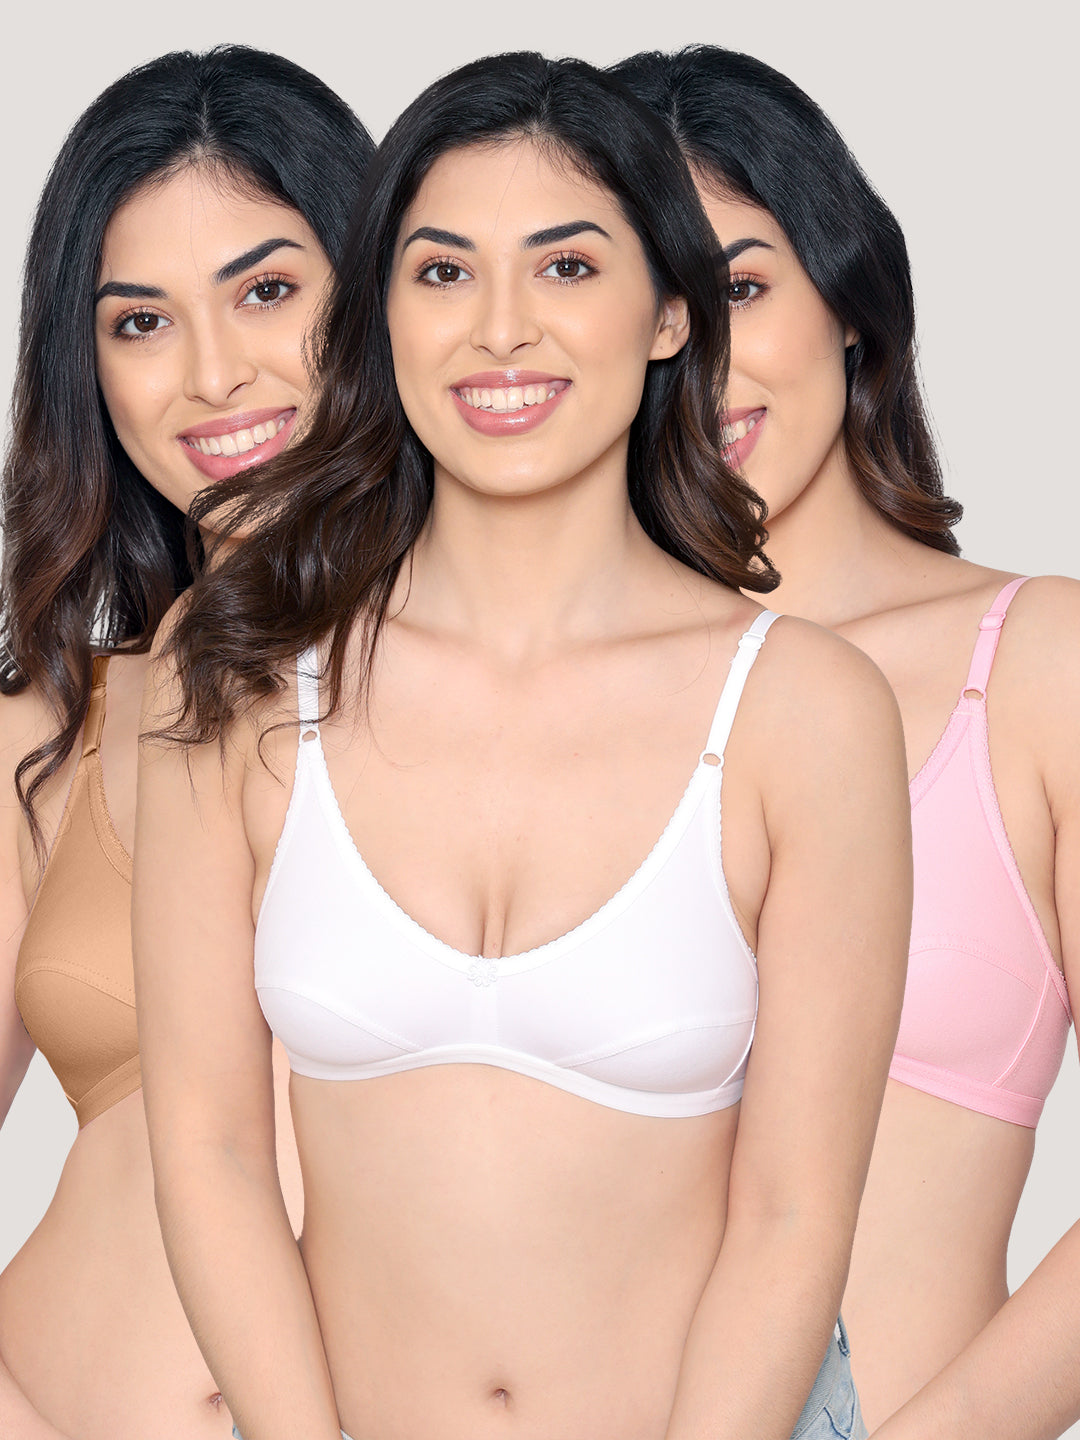 Kalyani Inner Wear - Opt for light padded t-shirt bras from Kalyani & feel  comfortable everyday. Article No: 5018 #Kalyani #KalyaniLingerie  #EverydayBra #TShirtBra #LightPaddedBra #FeelComfortable #Comfort #Support  #StylishLingerie